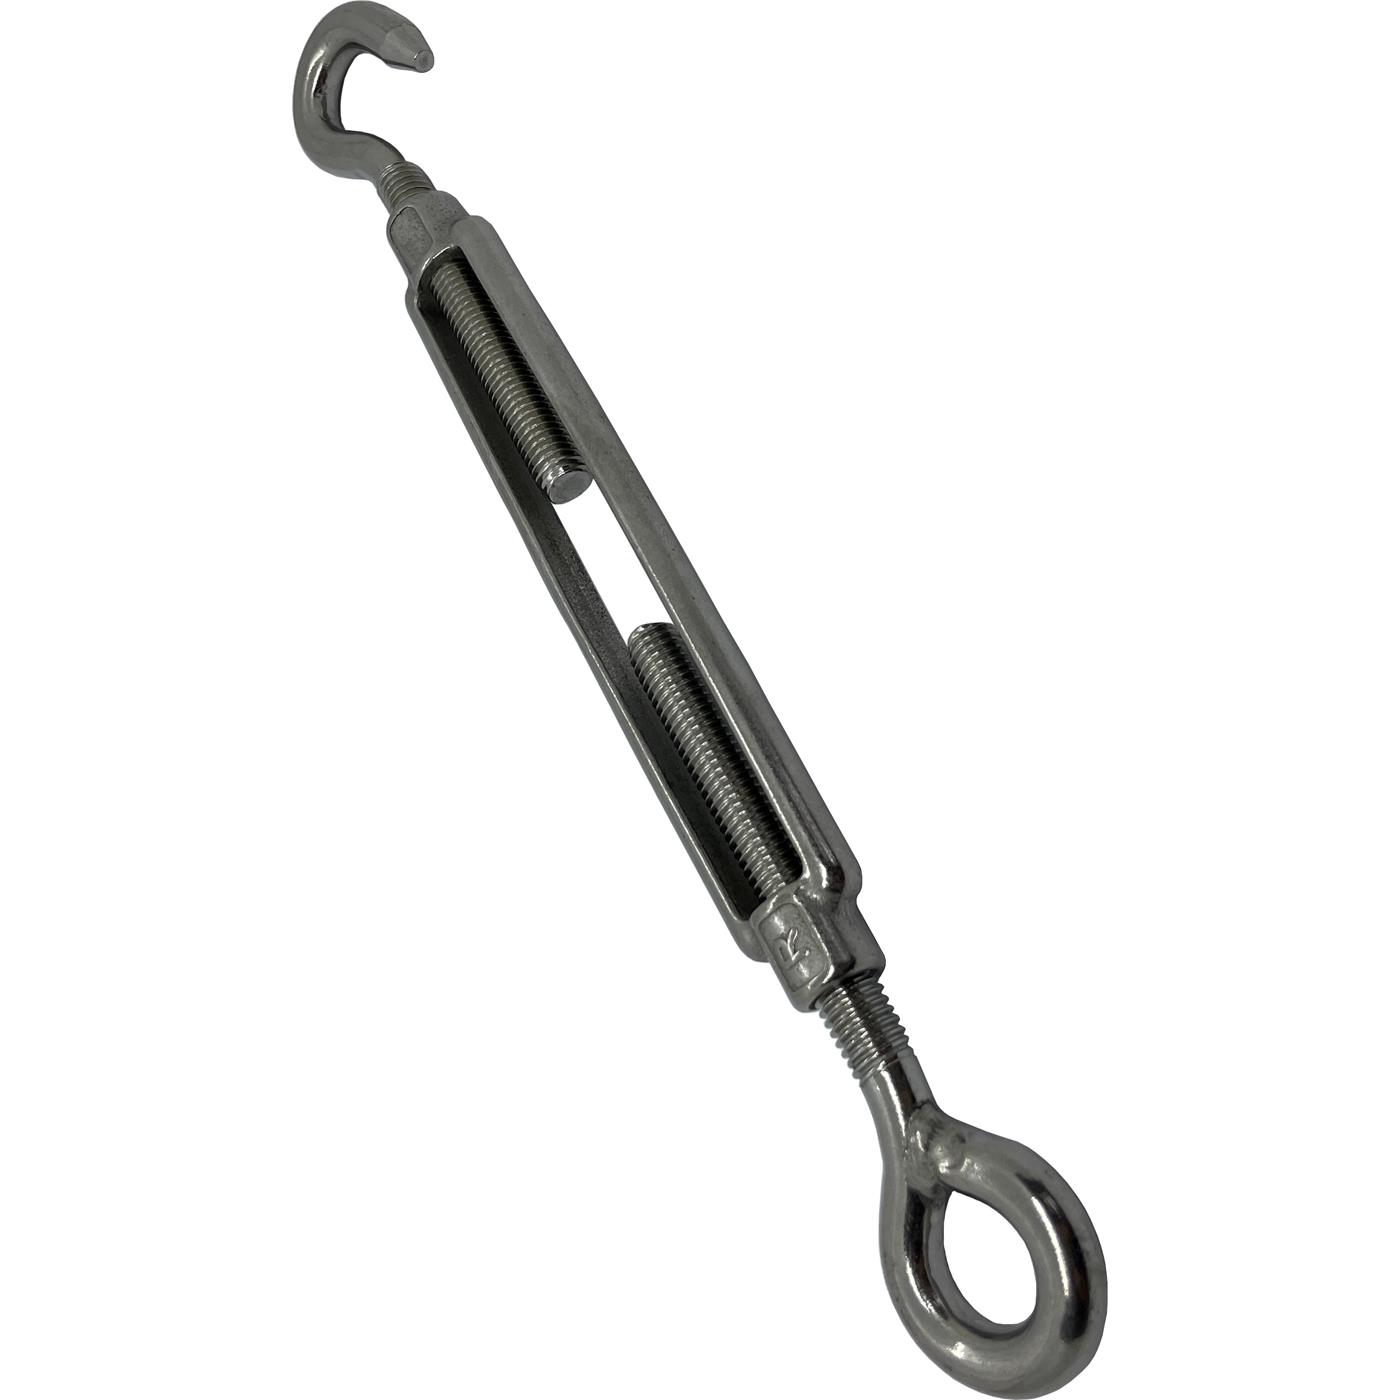 Rope tensioner Eyelet-Hook Stainless steel V4A 316 M12 Turnbuckle Shroud clamp